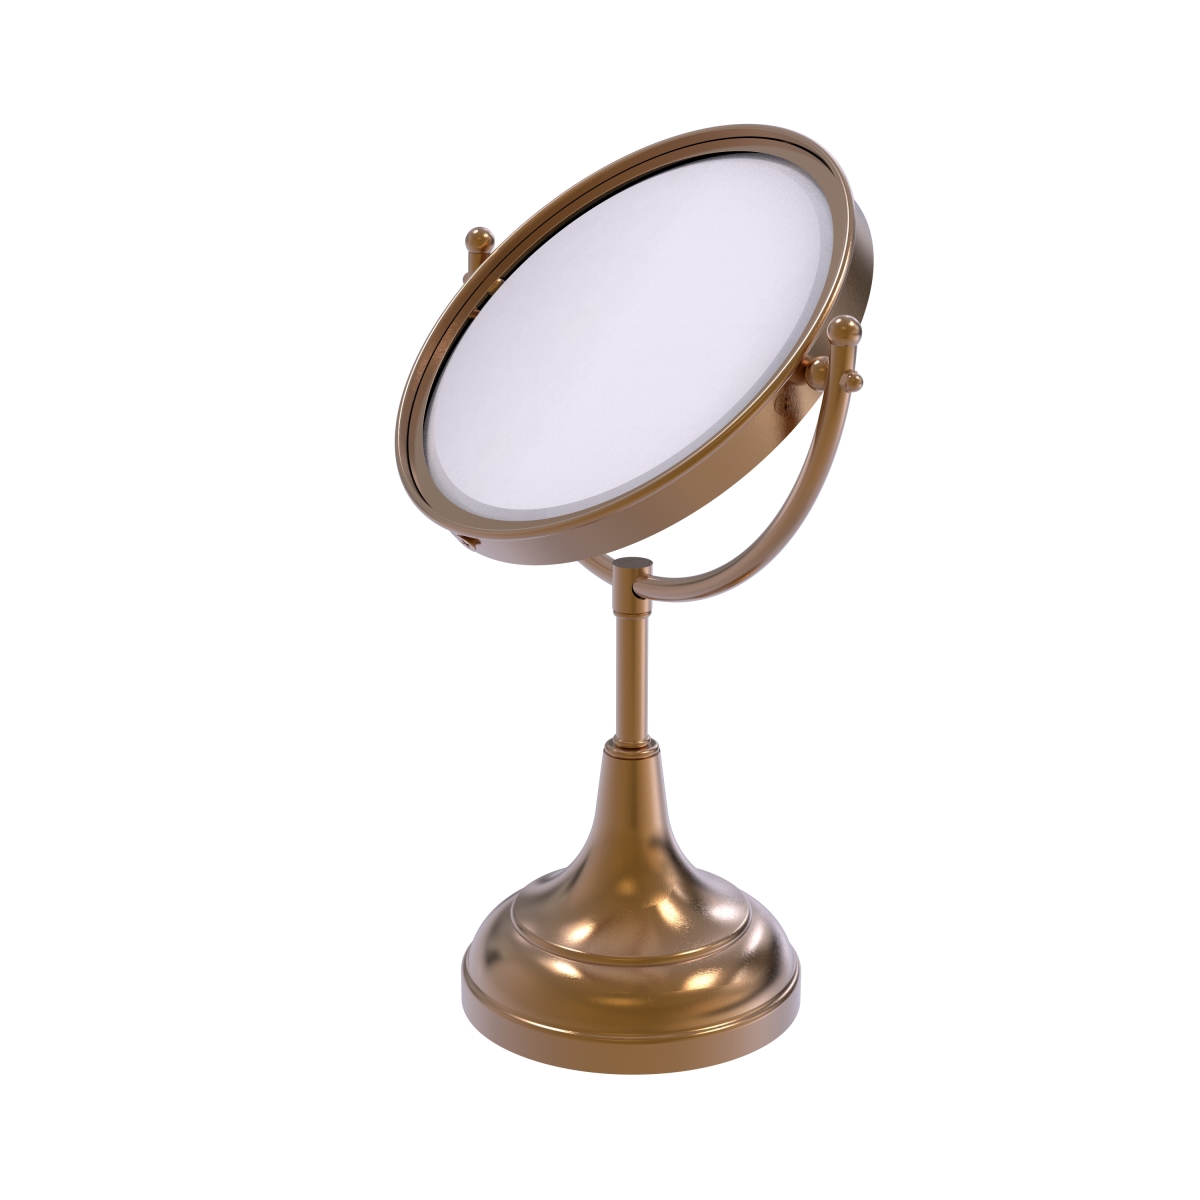 Dm-2-2x-bbr 8 In. Vanity Top Make-up Mirror 2x Magnification, Brushed Bronze